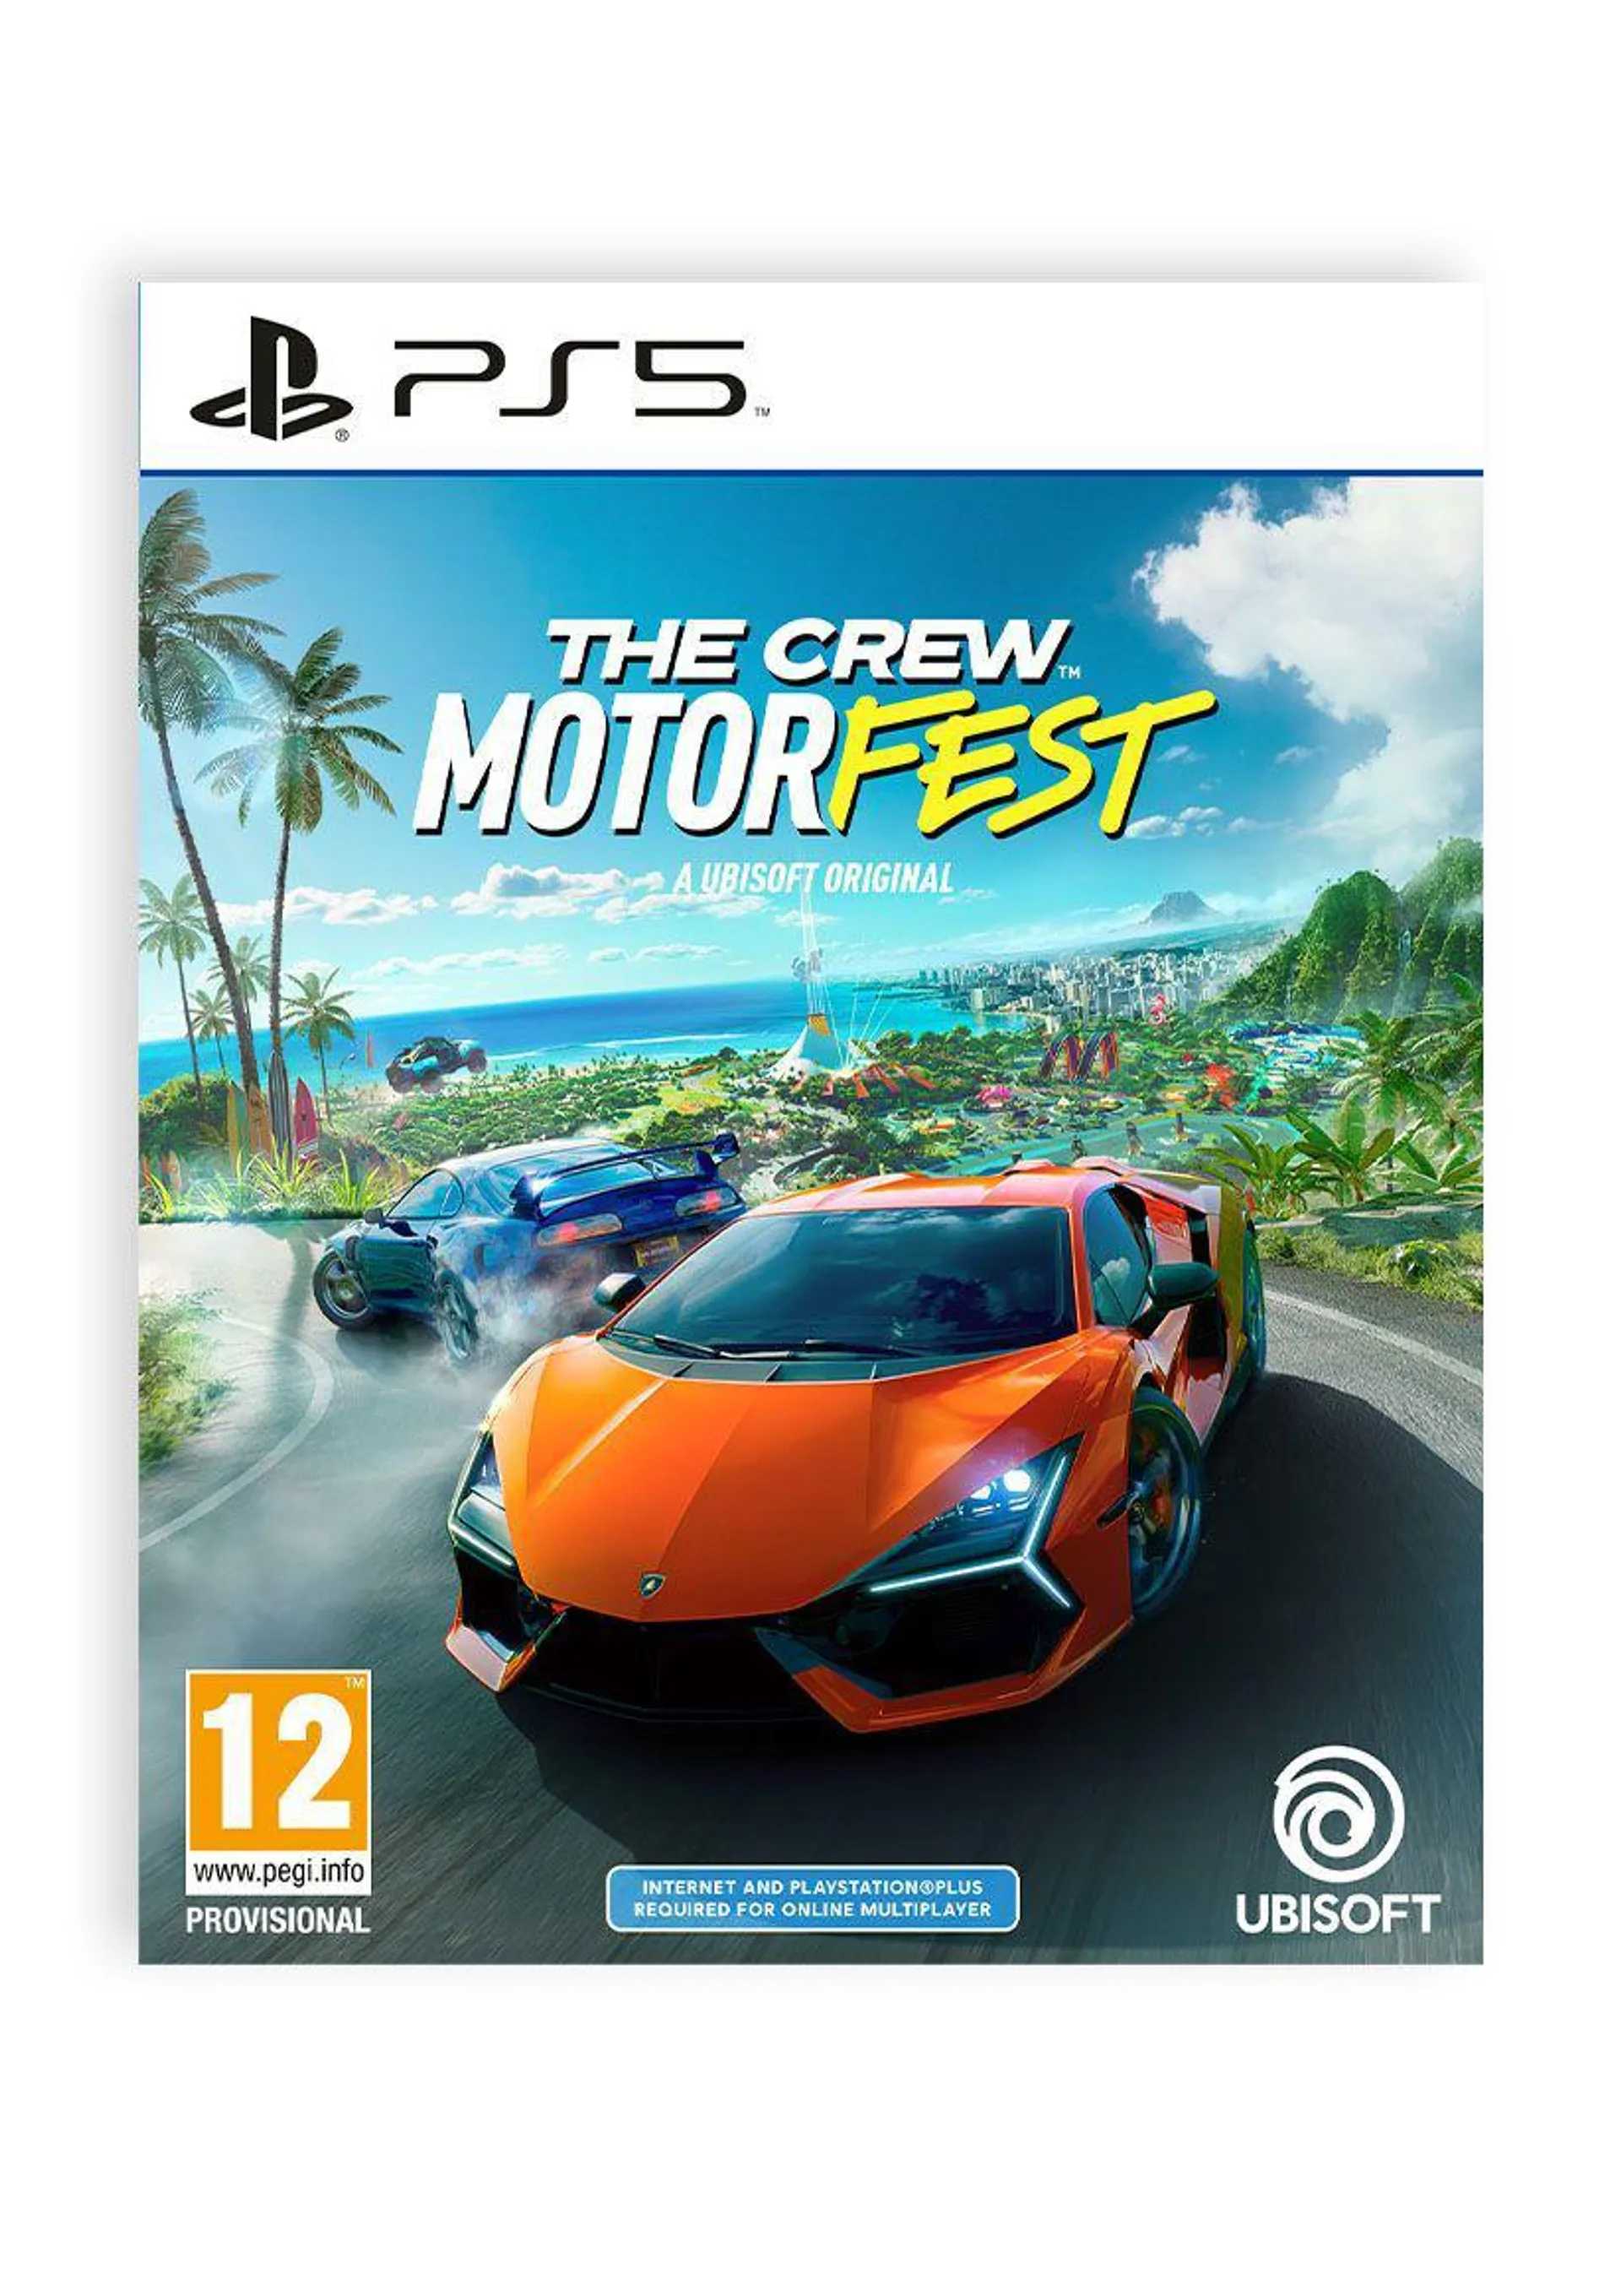 The Crew Motorfest on PlayStation 5